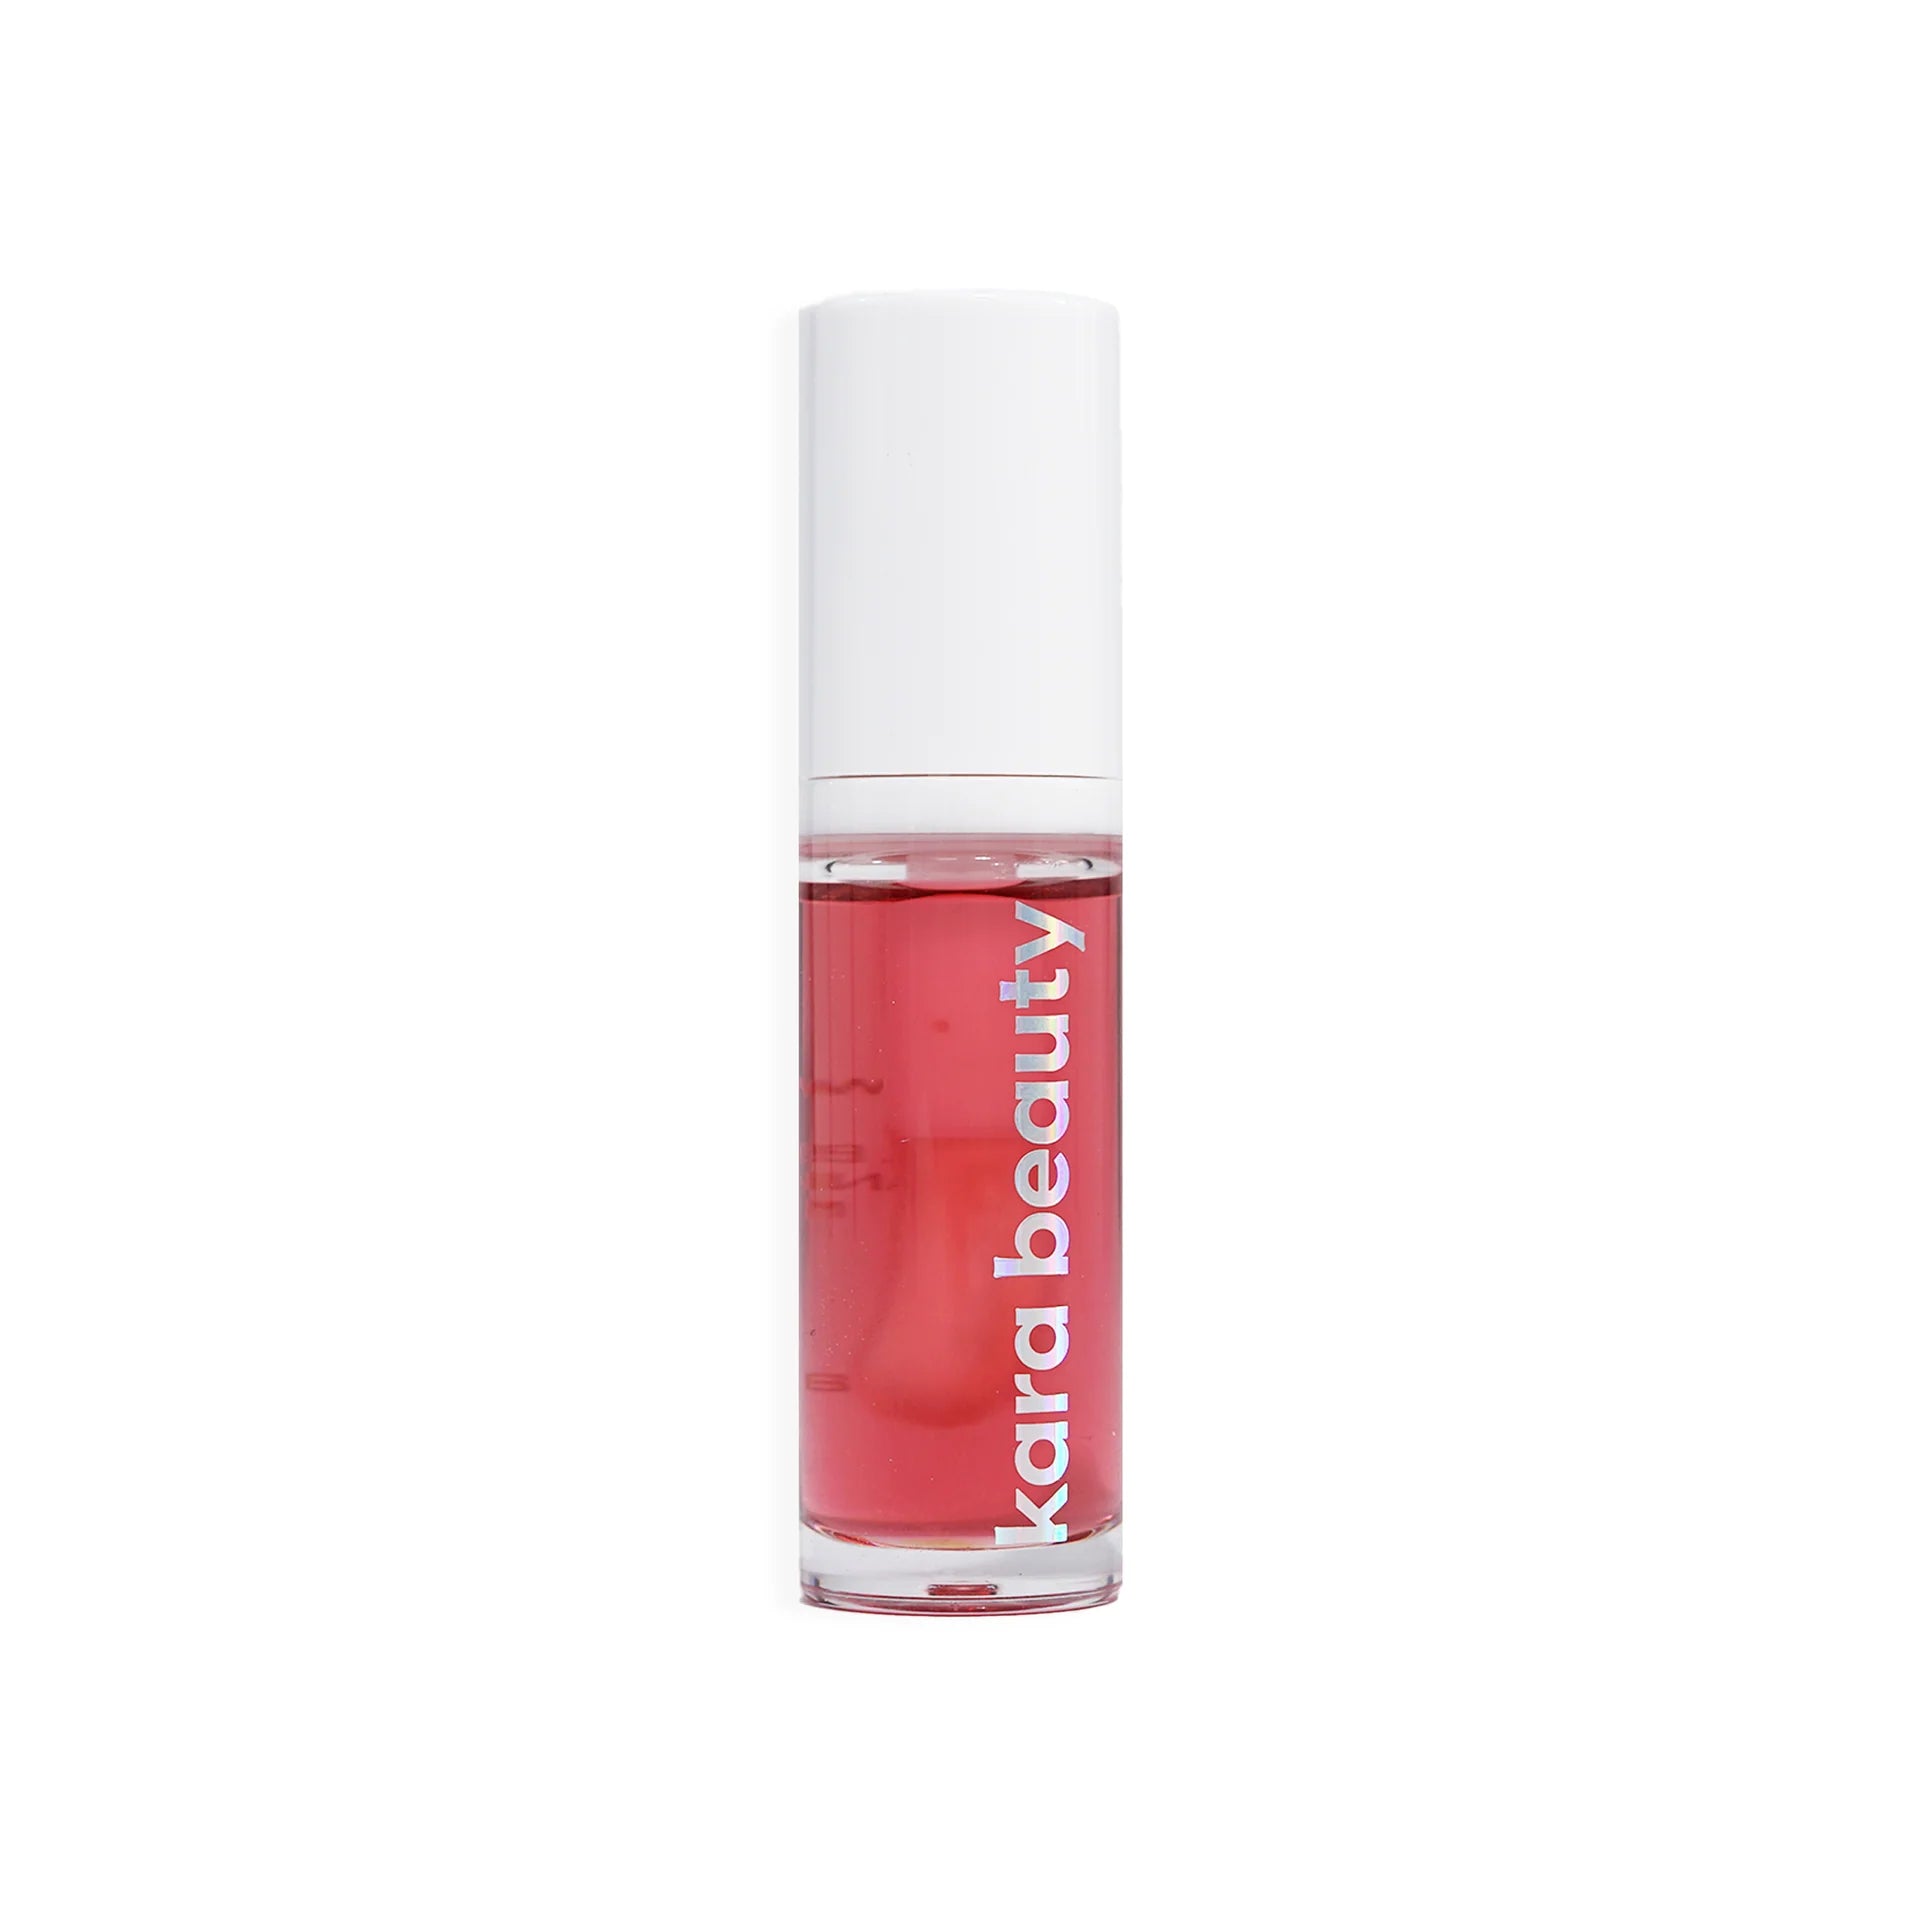 Kara Beauty - Essentials Lip Oil 3pc Set